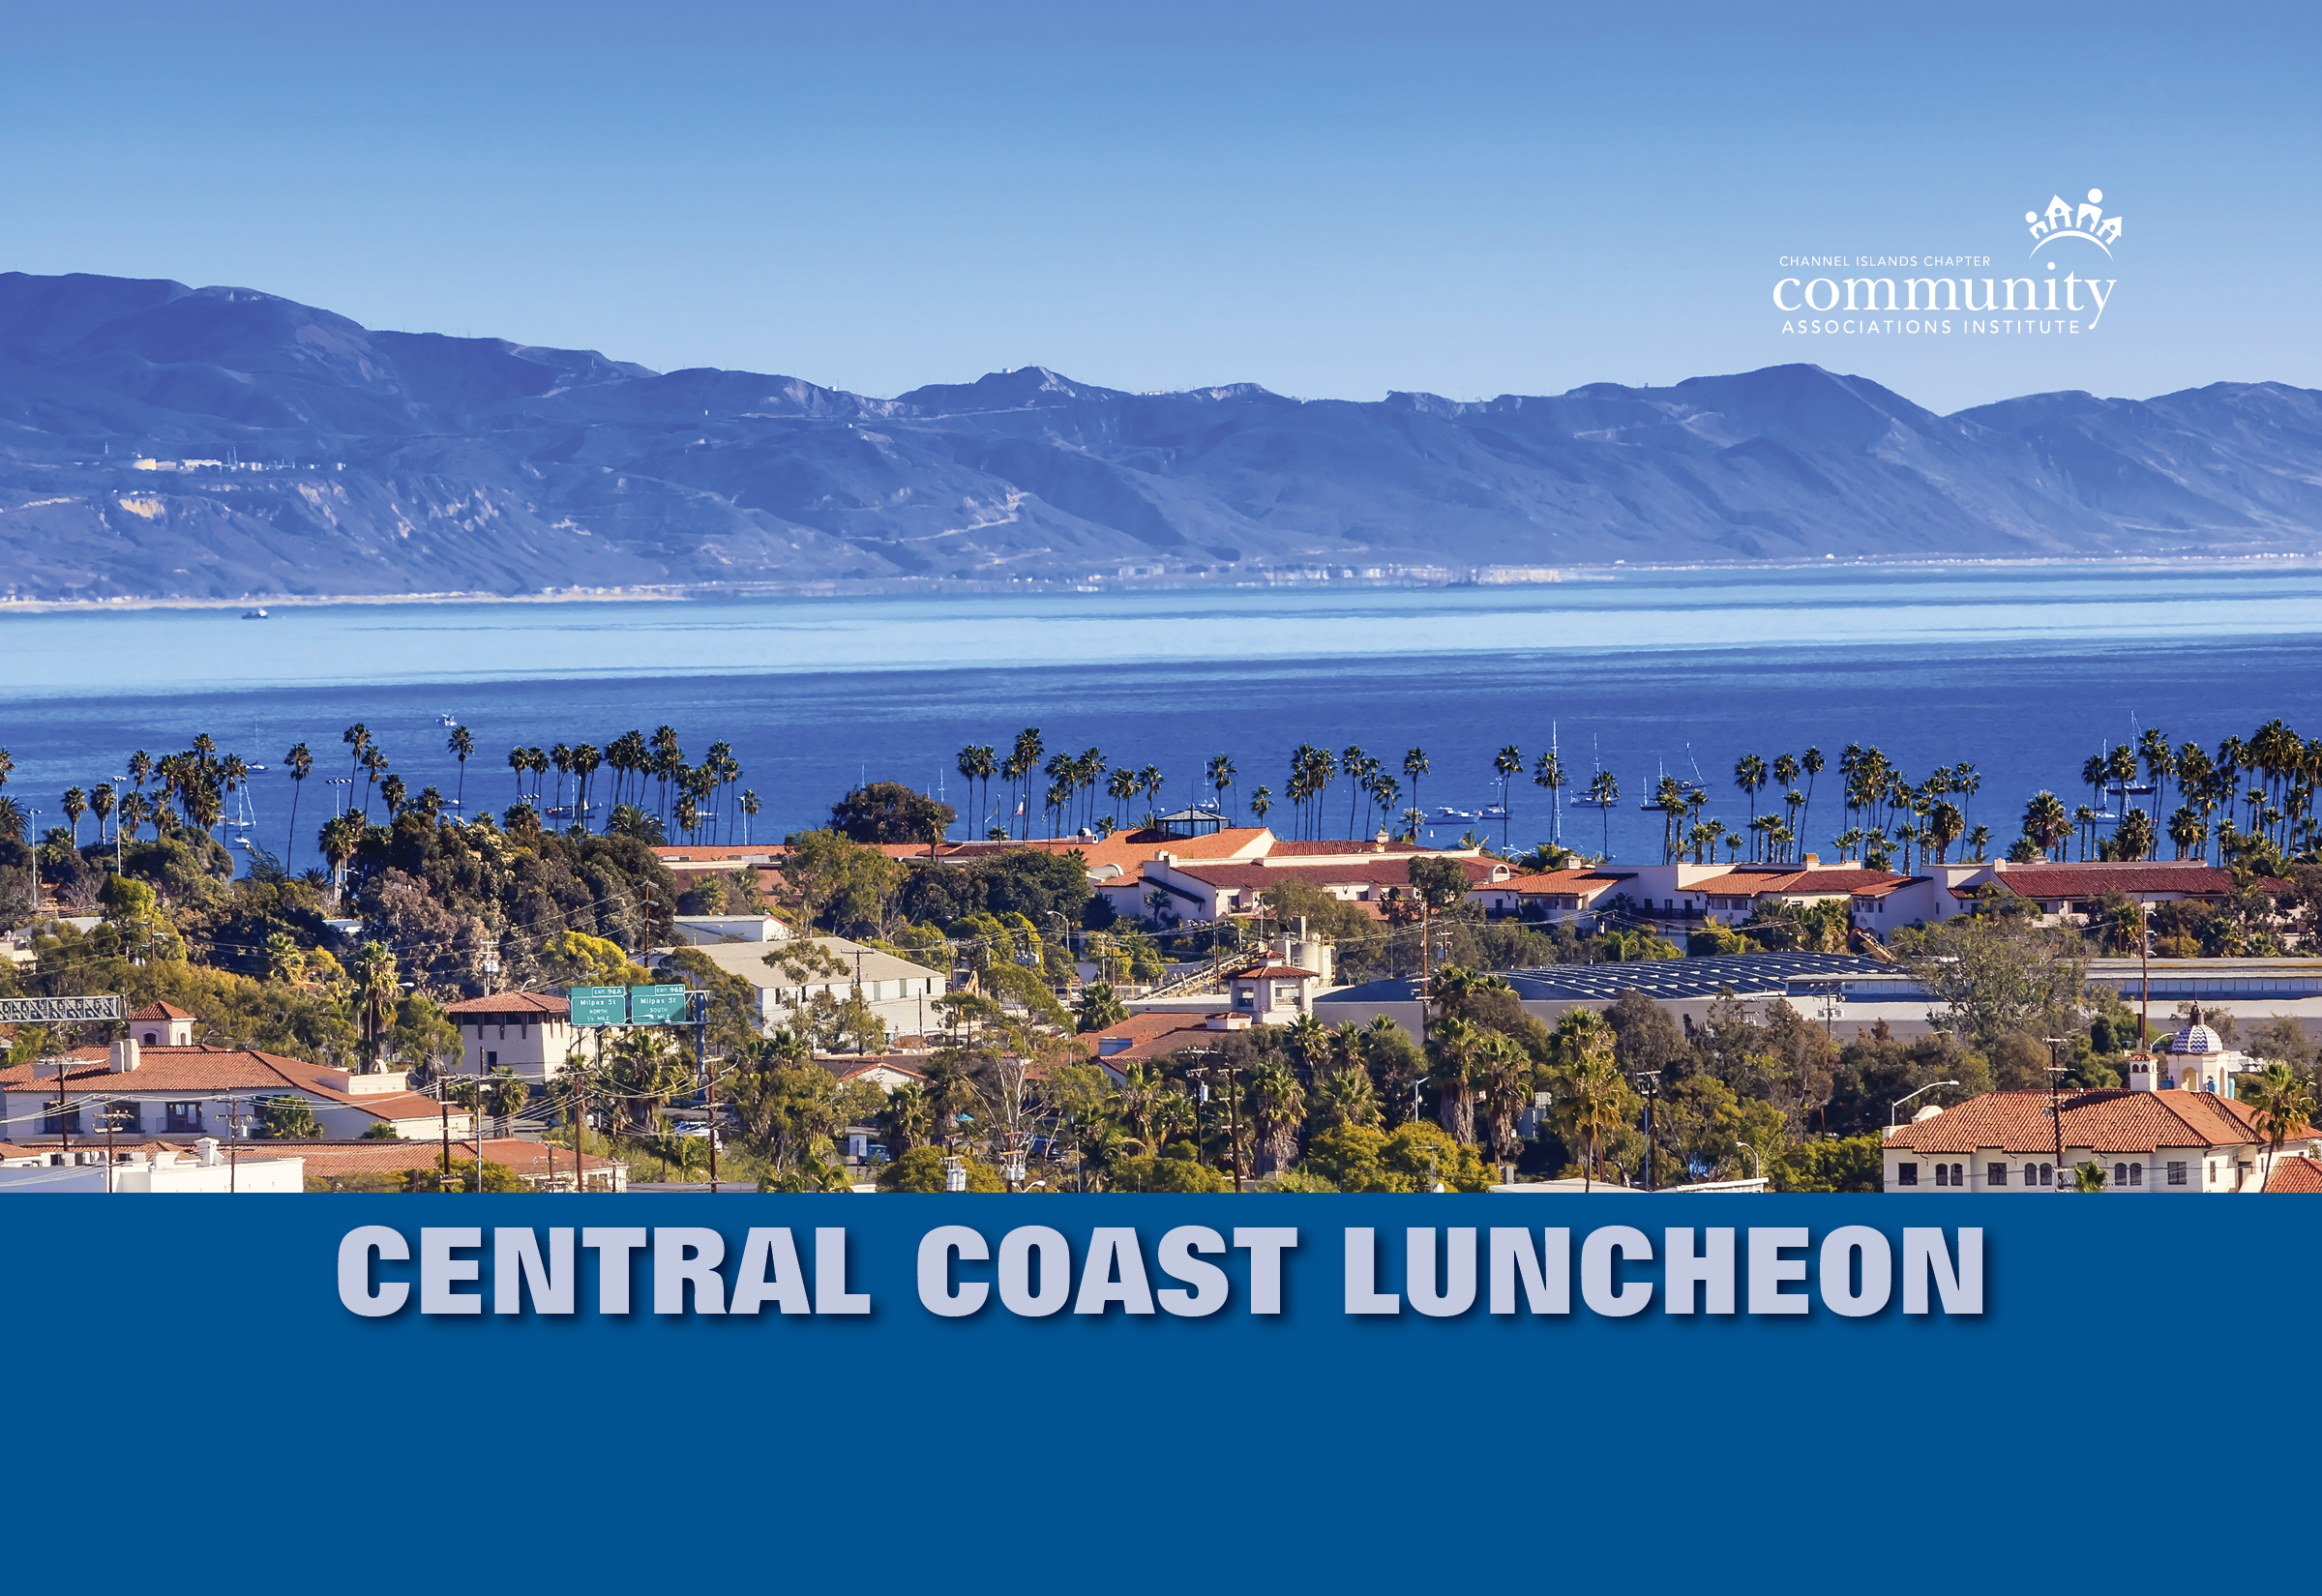 Central Coast Luncheon